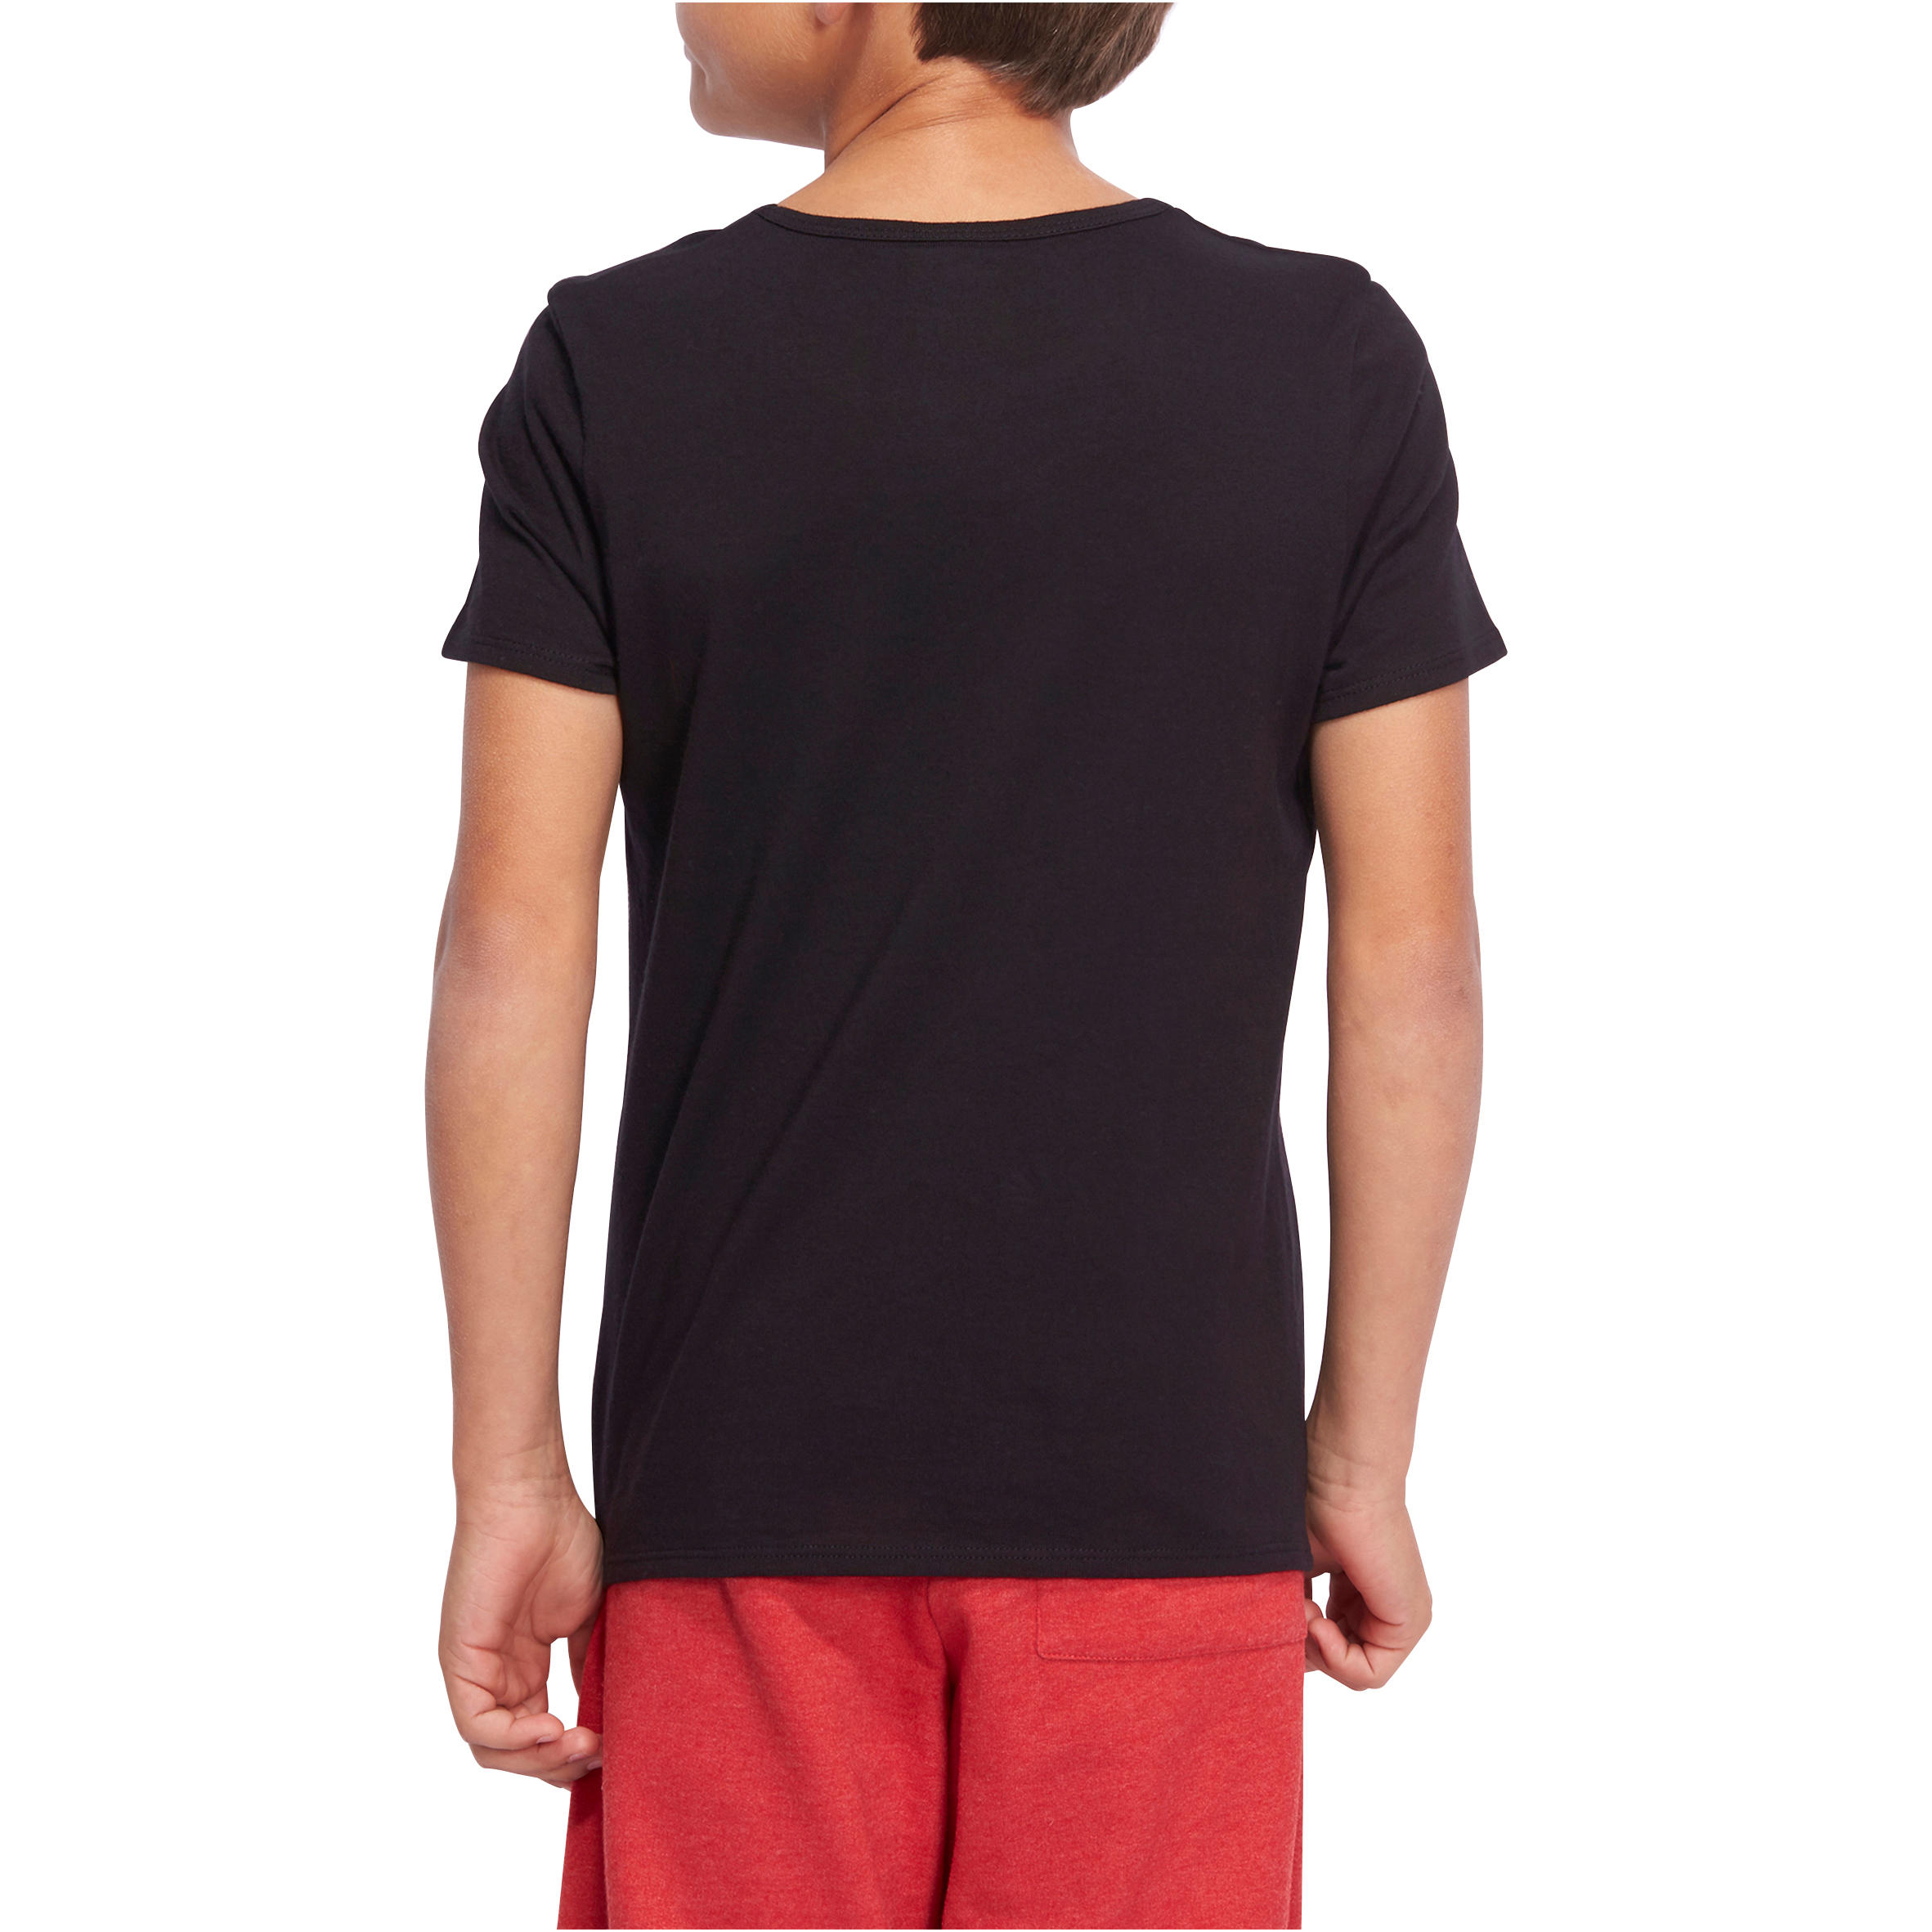 100 Boys' Short-Sleeved Gym T-Shirt - Black 4/8